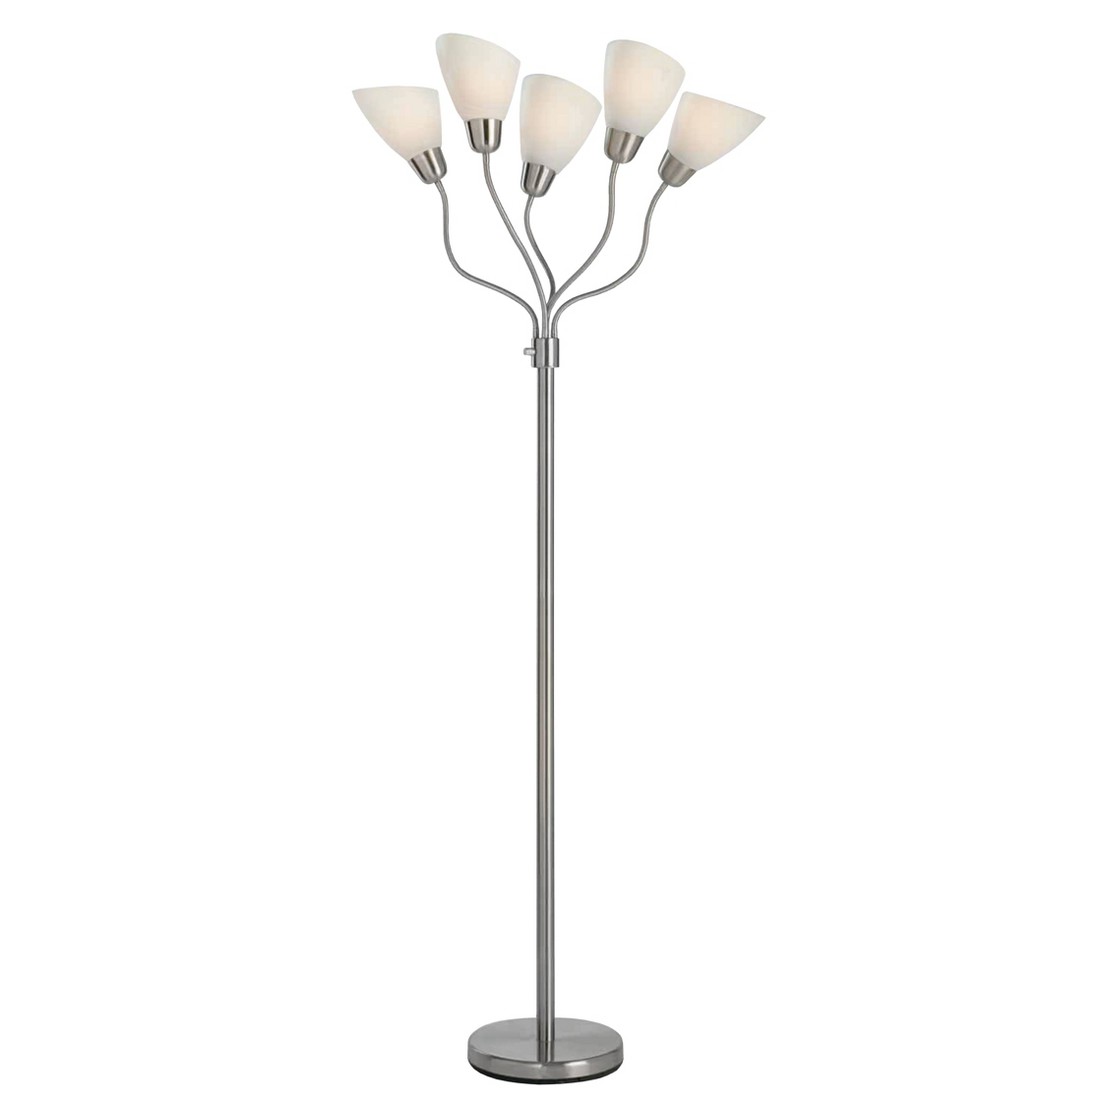 Learn More about Room Essentials 5 Head Floor Lamp - Warisan Lighting